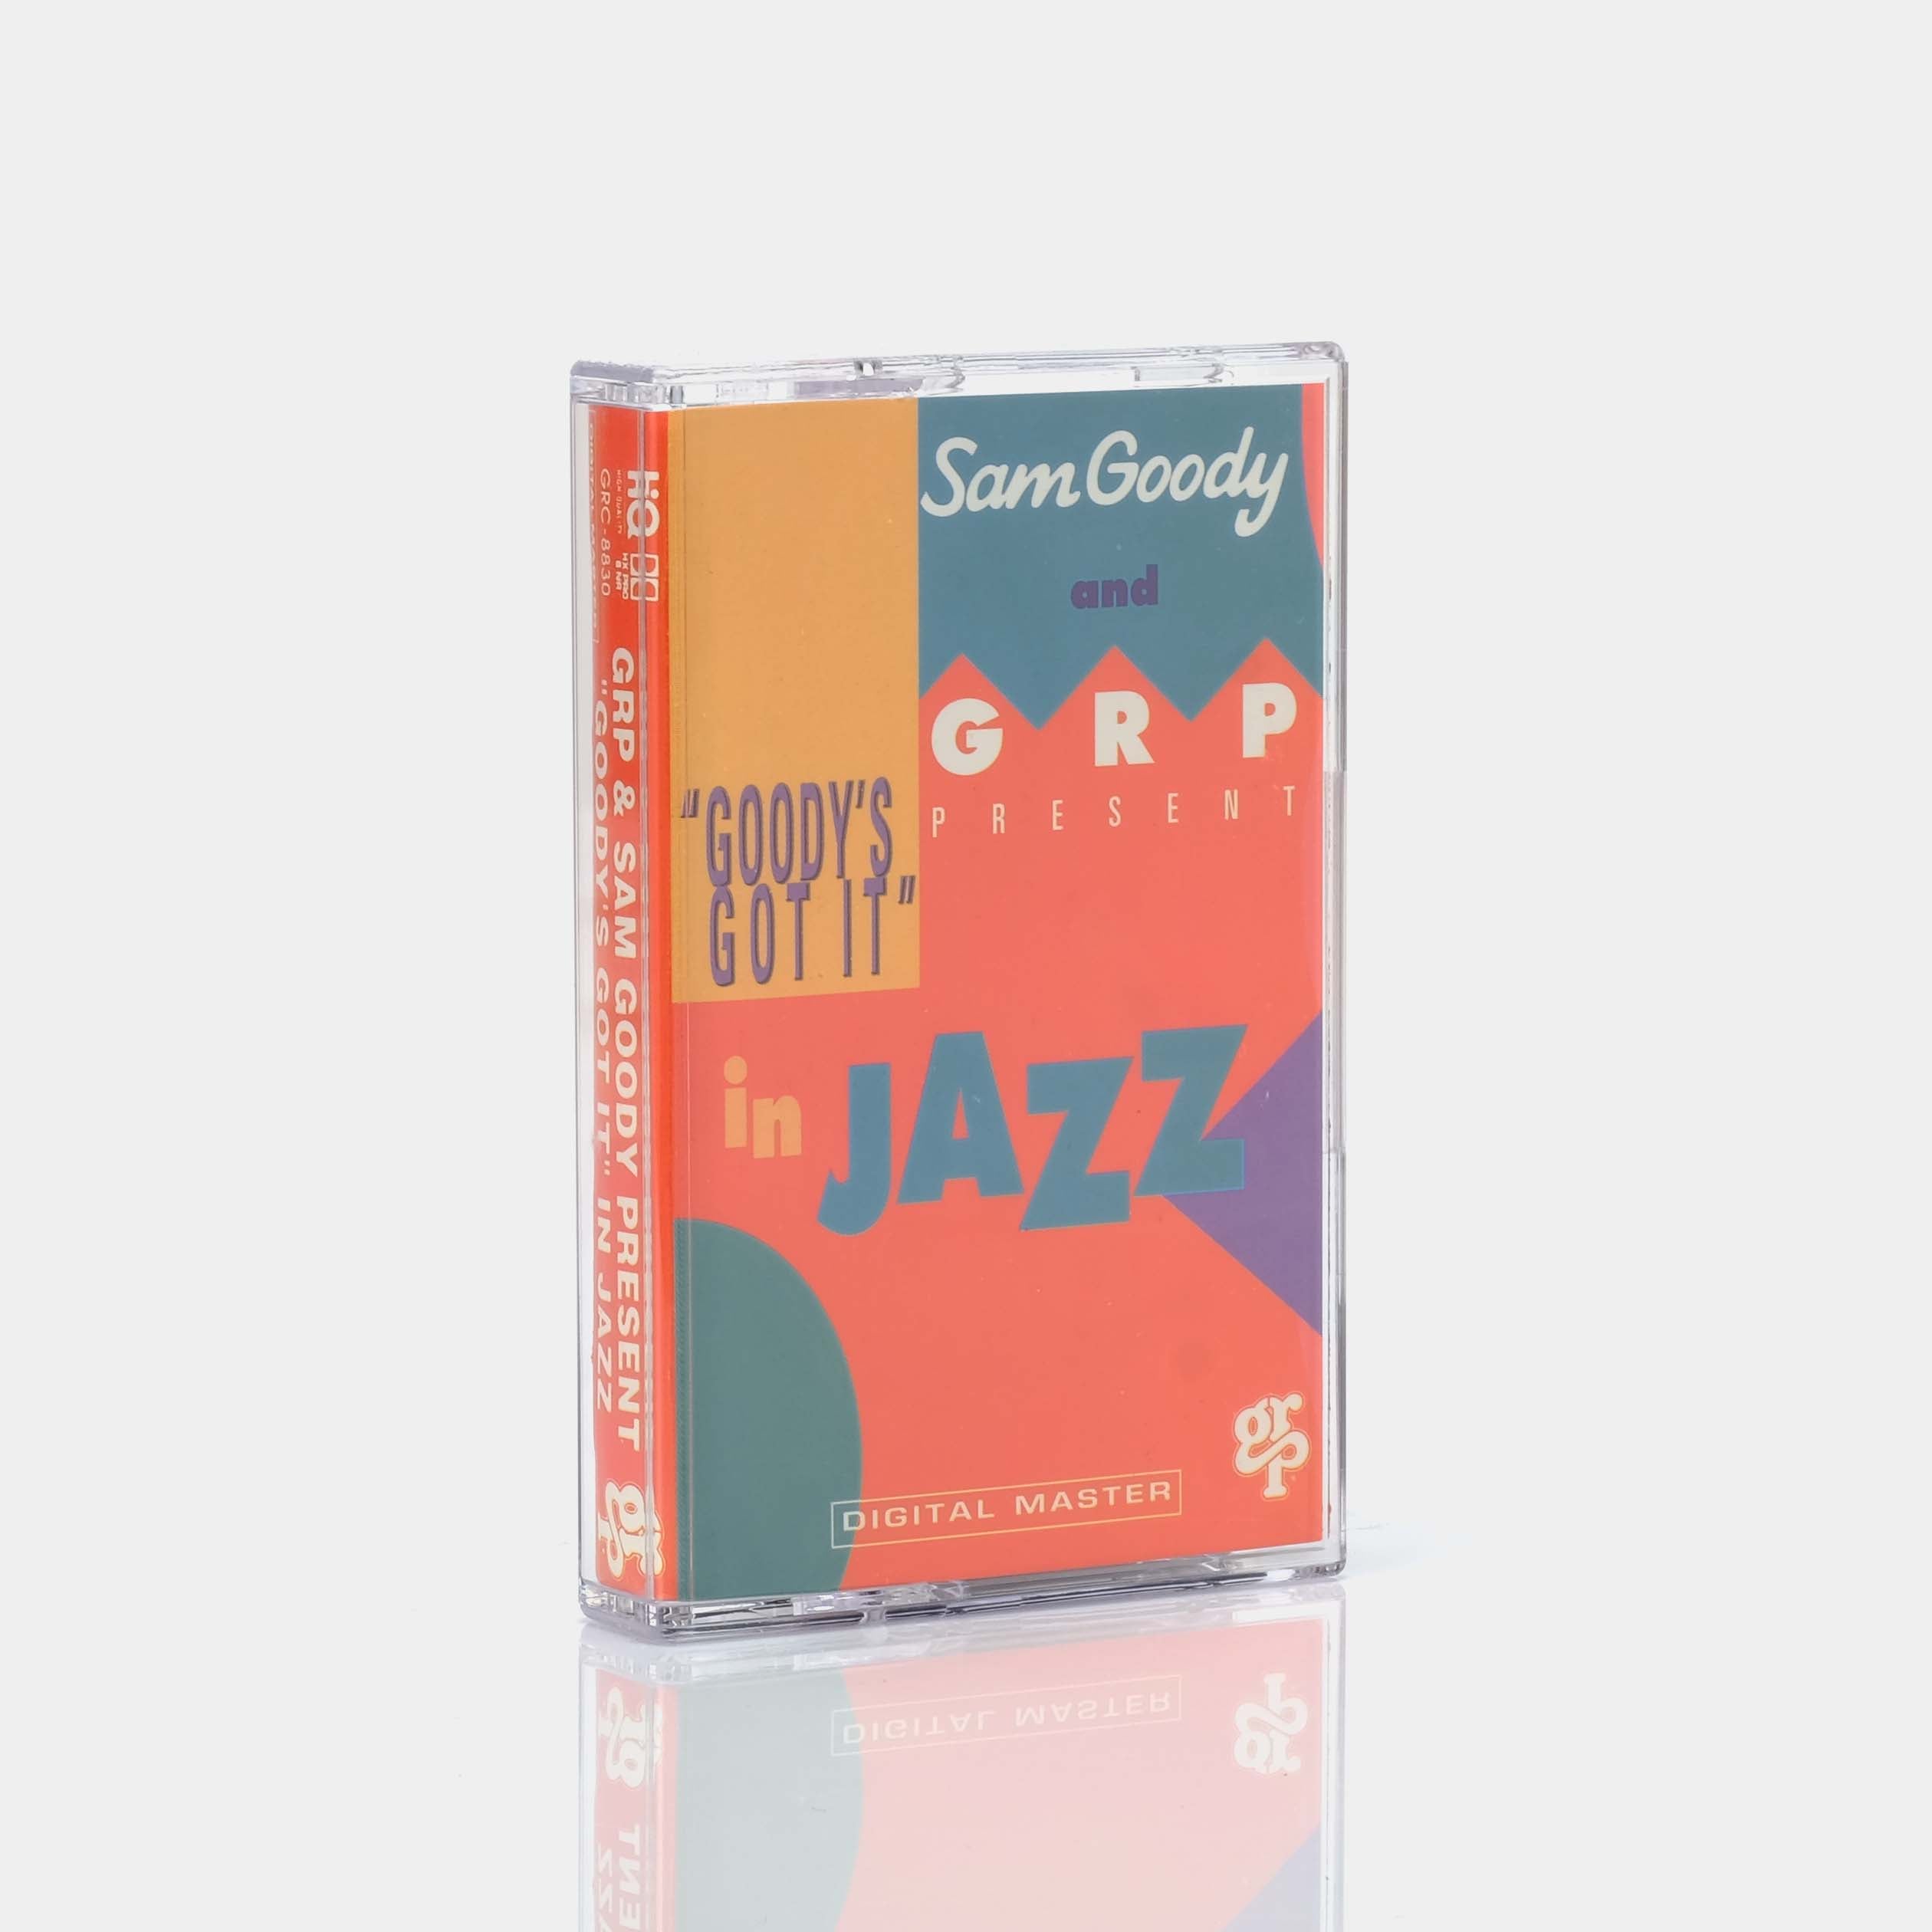 Sam Goody & GRP Present "Goody's Got It" In Jazz Cassette Tape